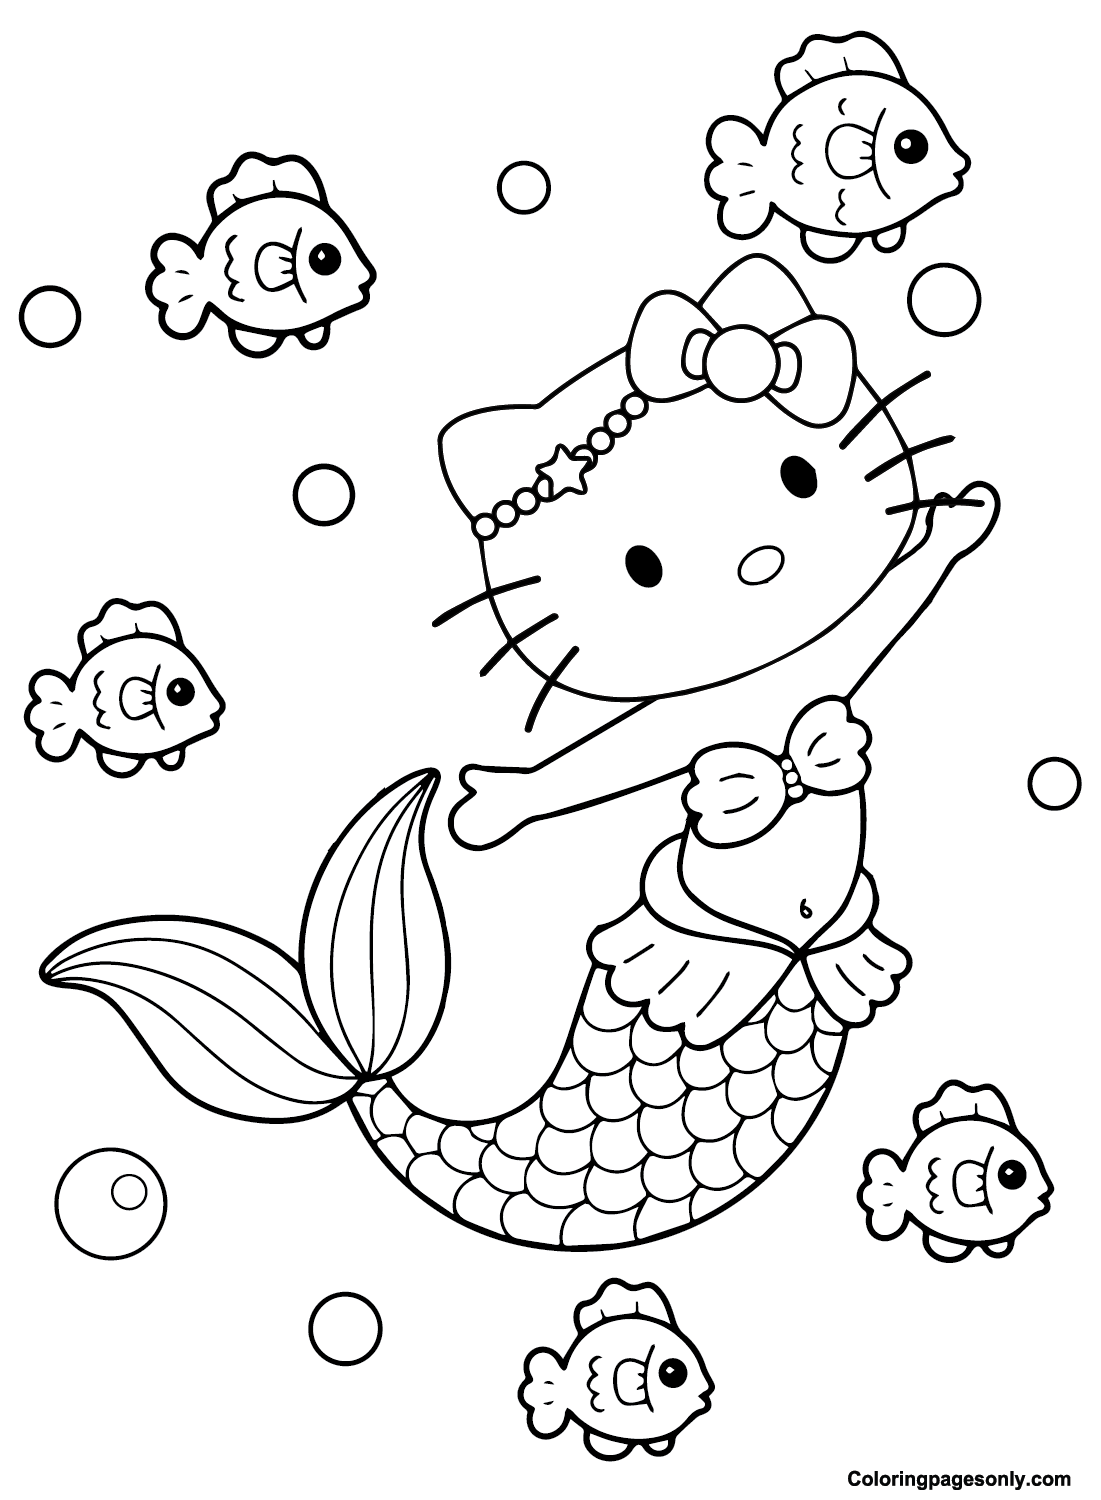 Drucken Sie „Hello Kitty Mermaid“ von „Hello Kitty Mermaid“.